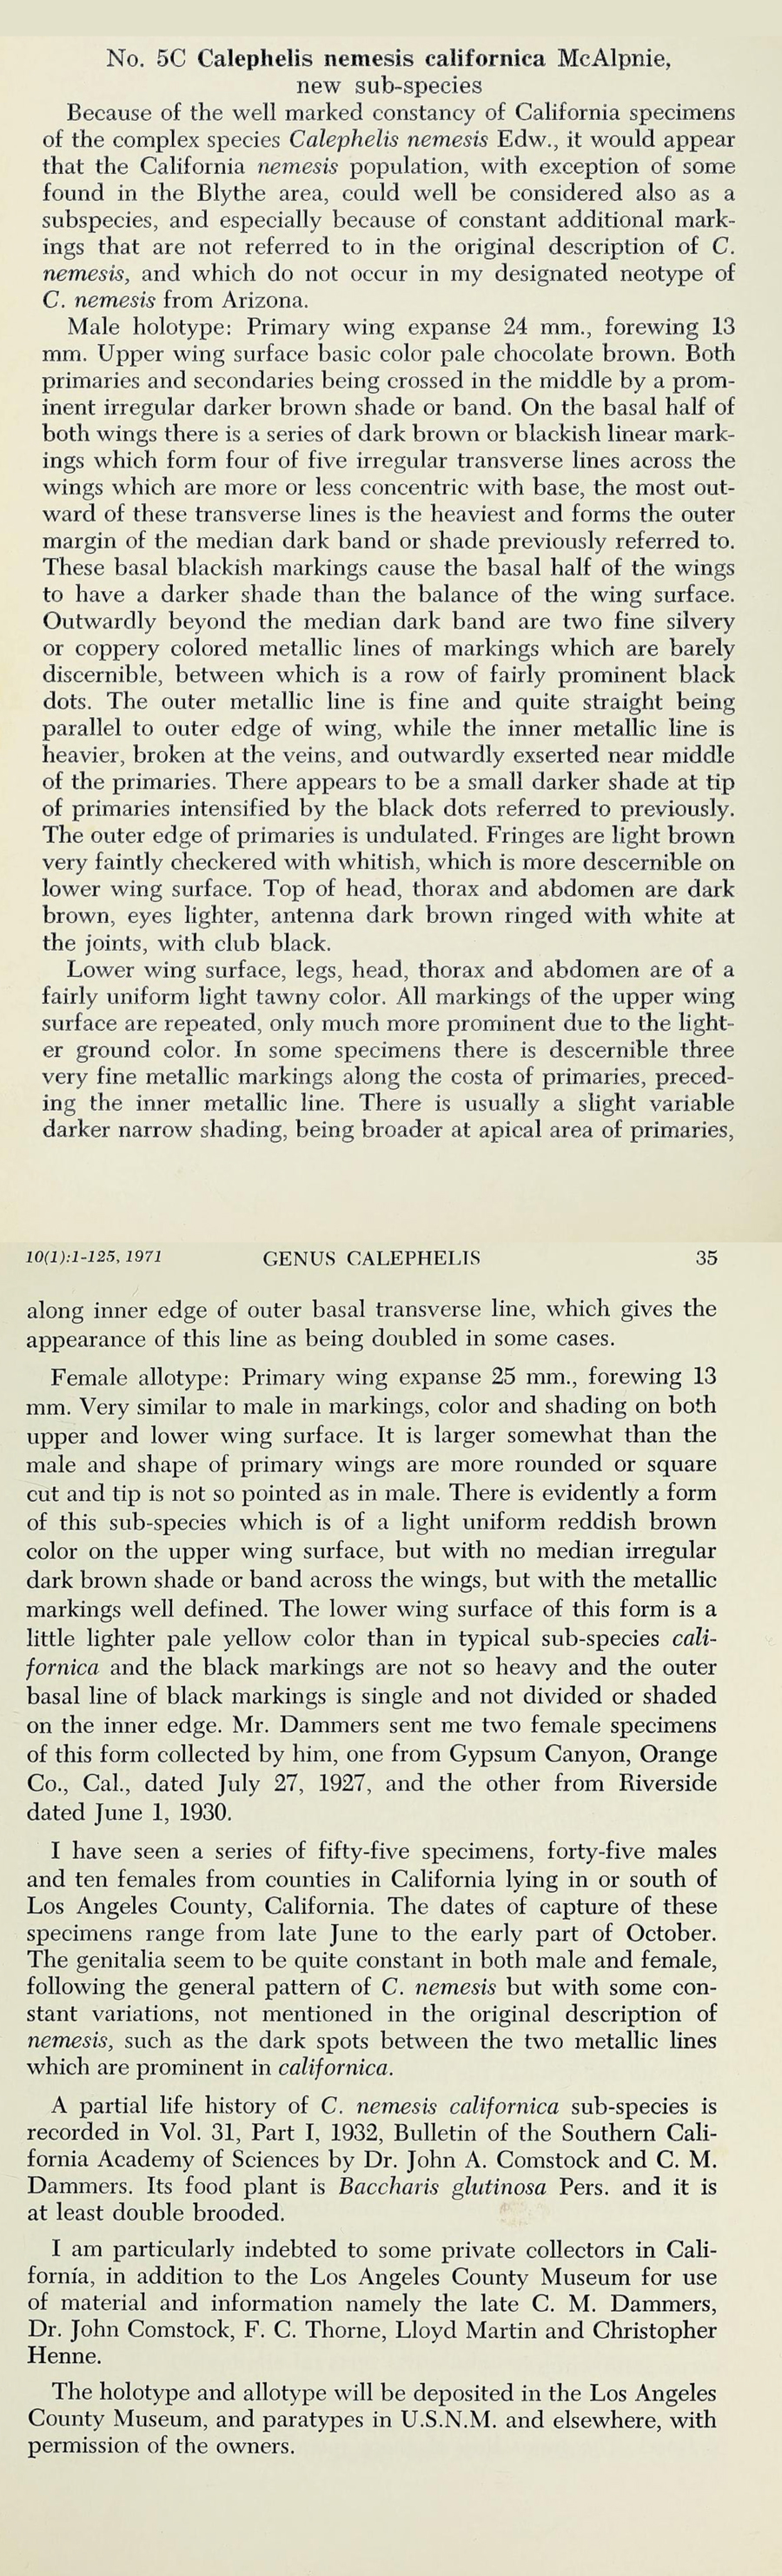 Original description of Calephelis nemesis dammersi - Fatal Metalmark